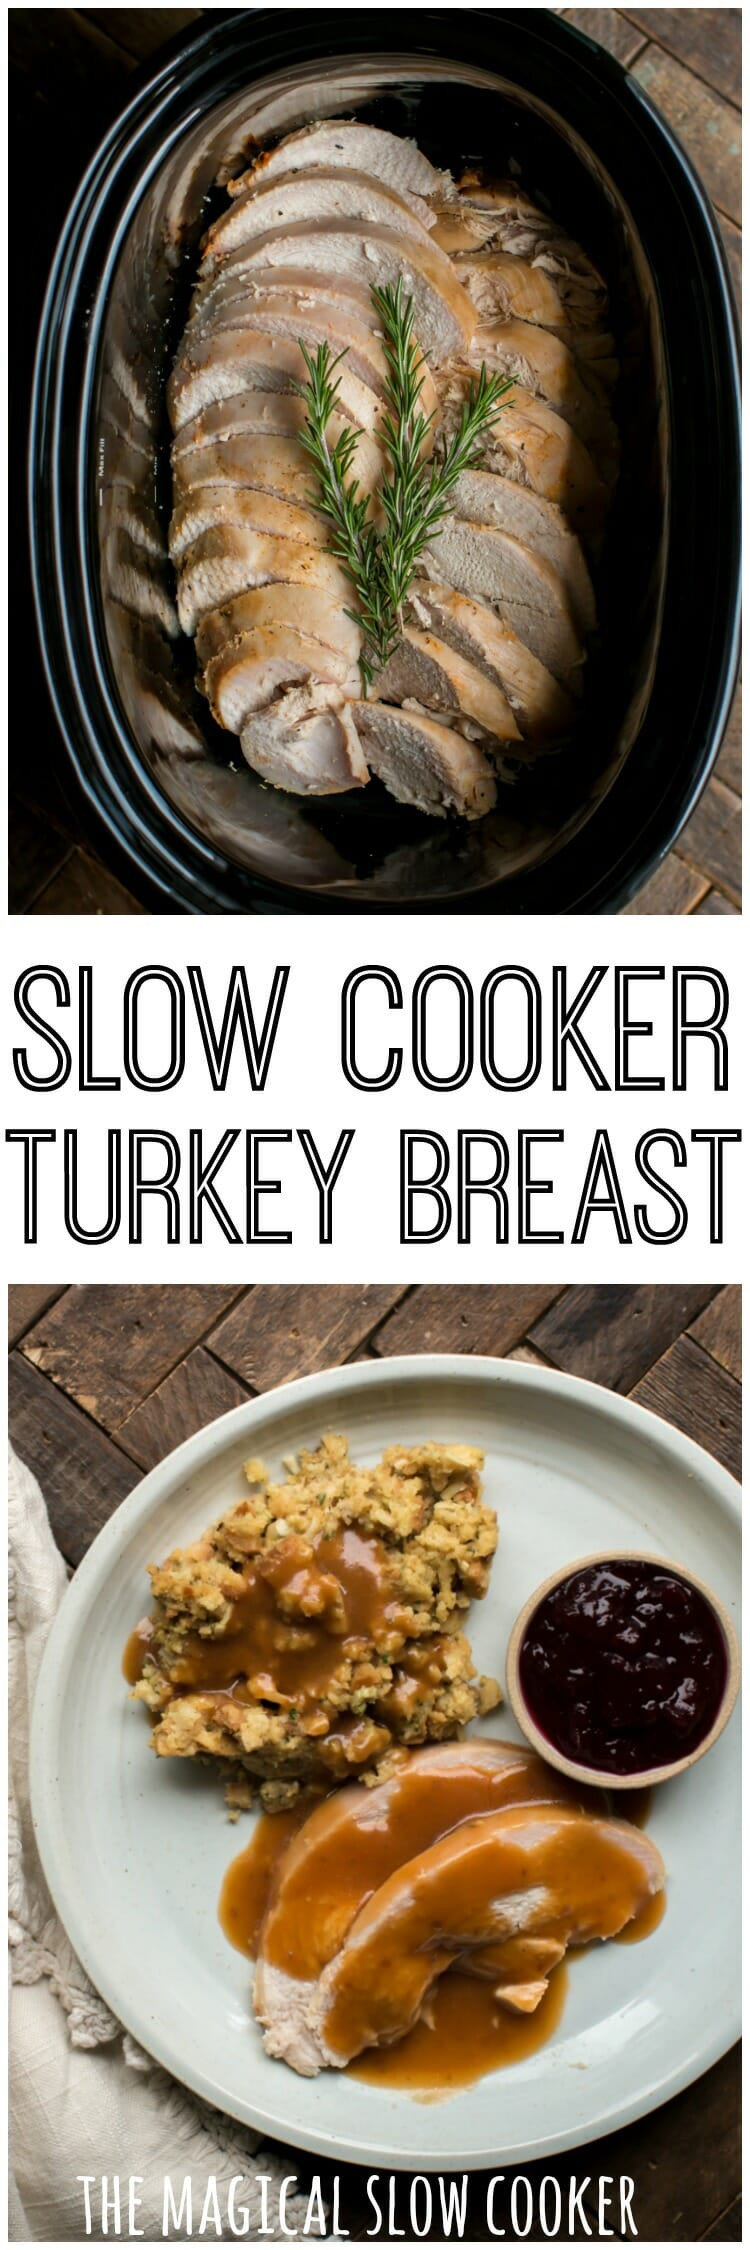 Thanksgiving Turkey Breast Slow Cooker
 Slow Cooker Turkey Breast The Magical Slow Cooker